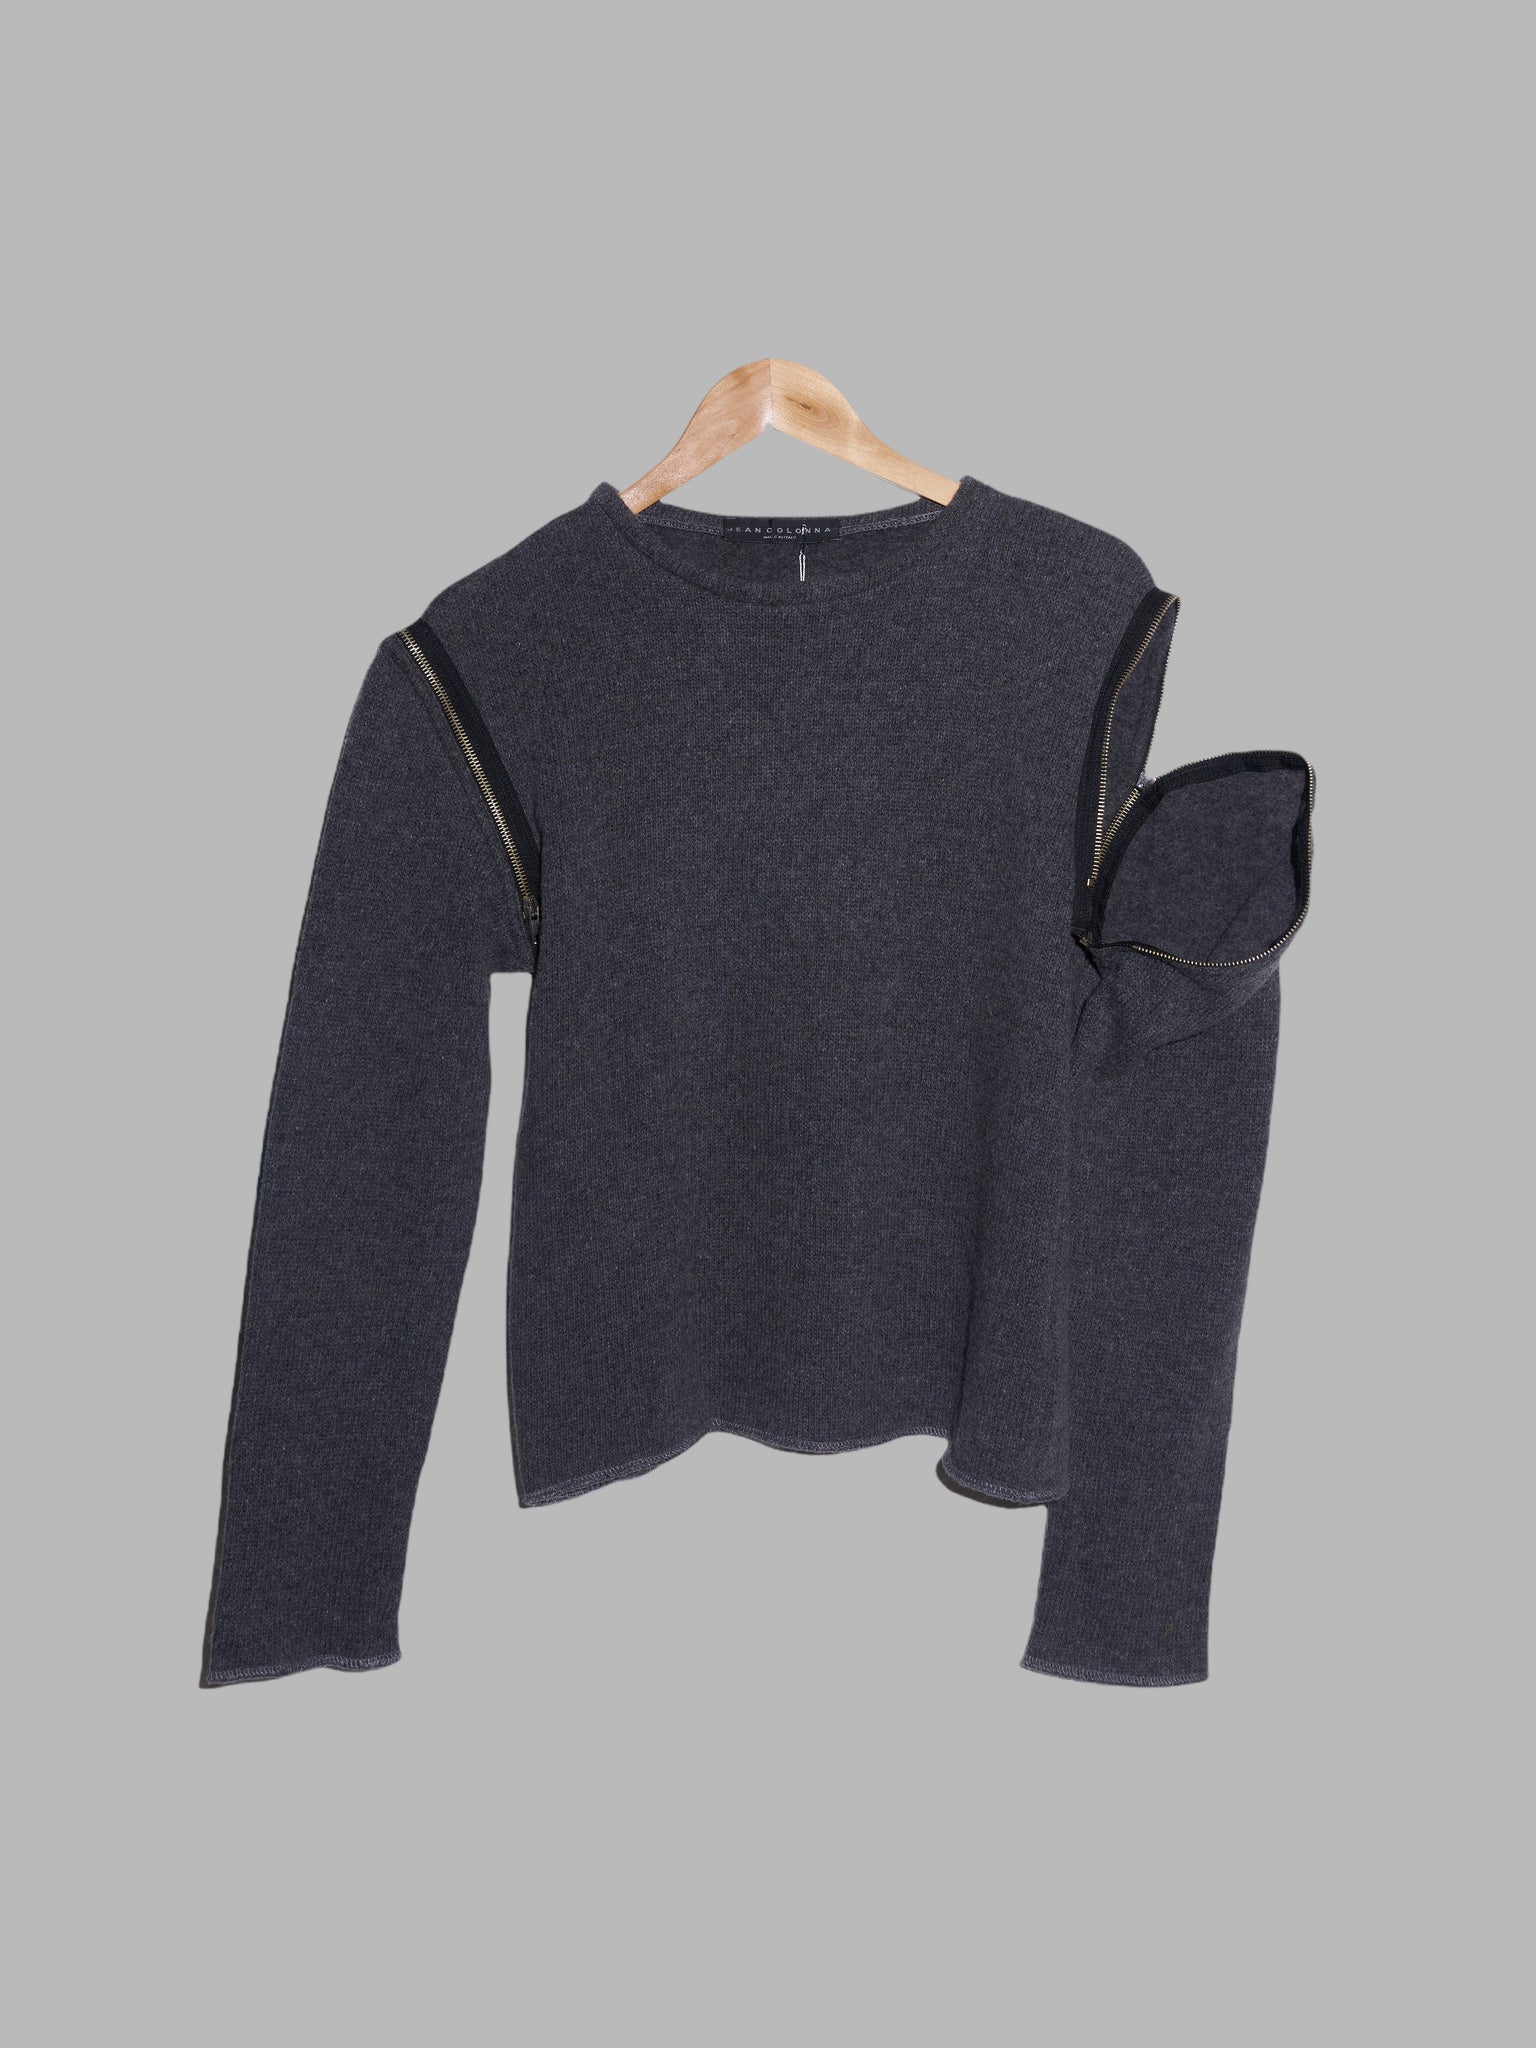 Jean Colonna dark grey jumper with zip off sleeves - S